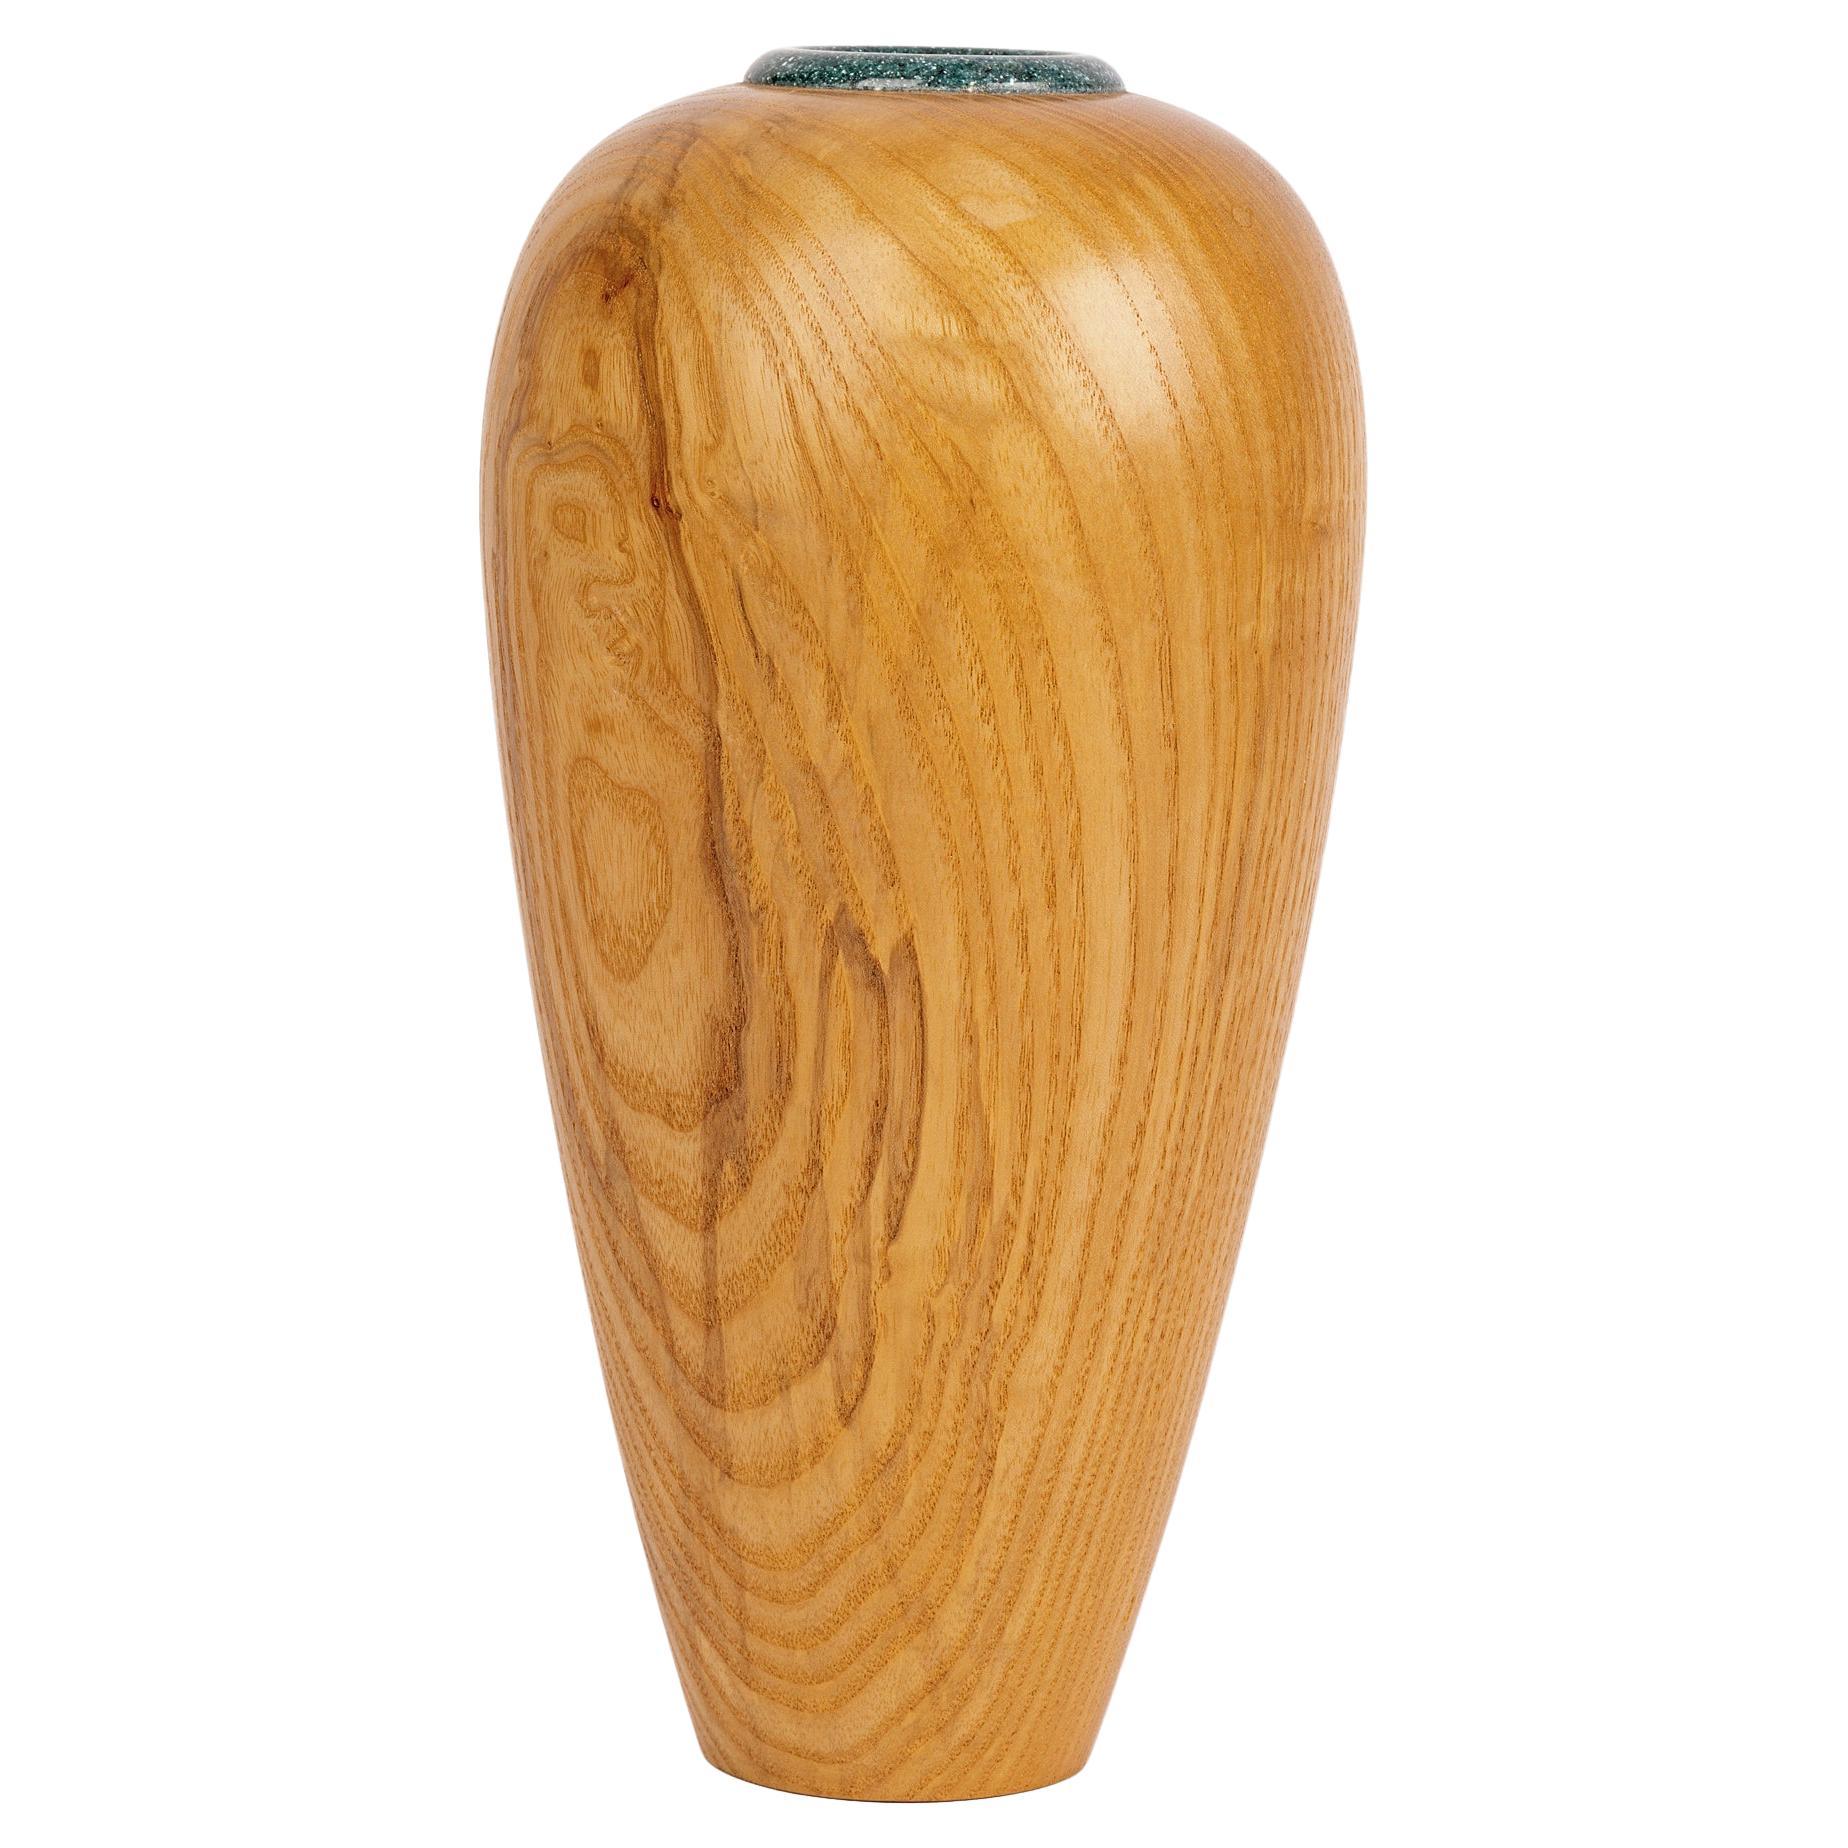 Andy James British Hand Turned Ash Wooden Vase For Sale